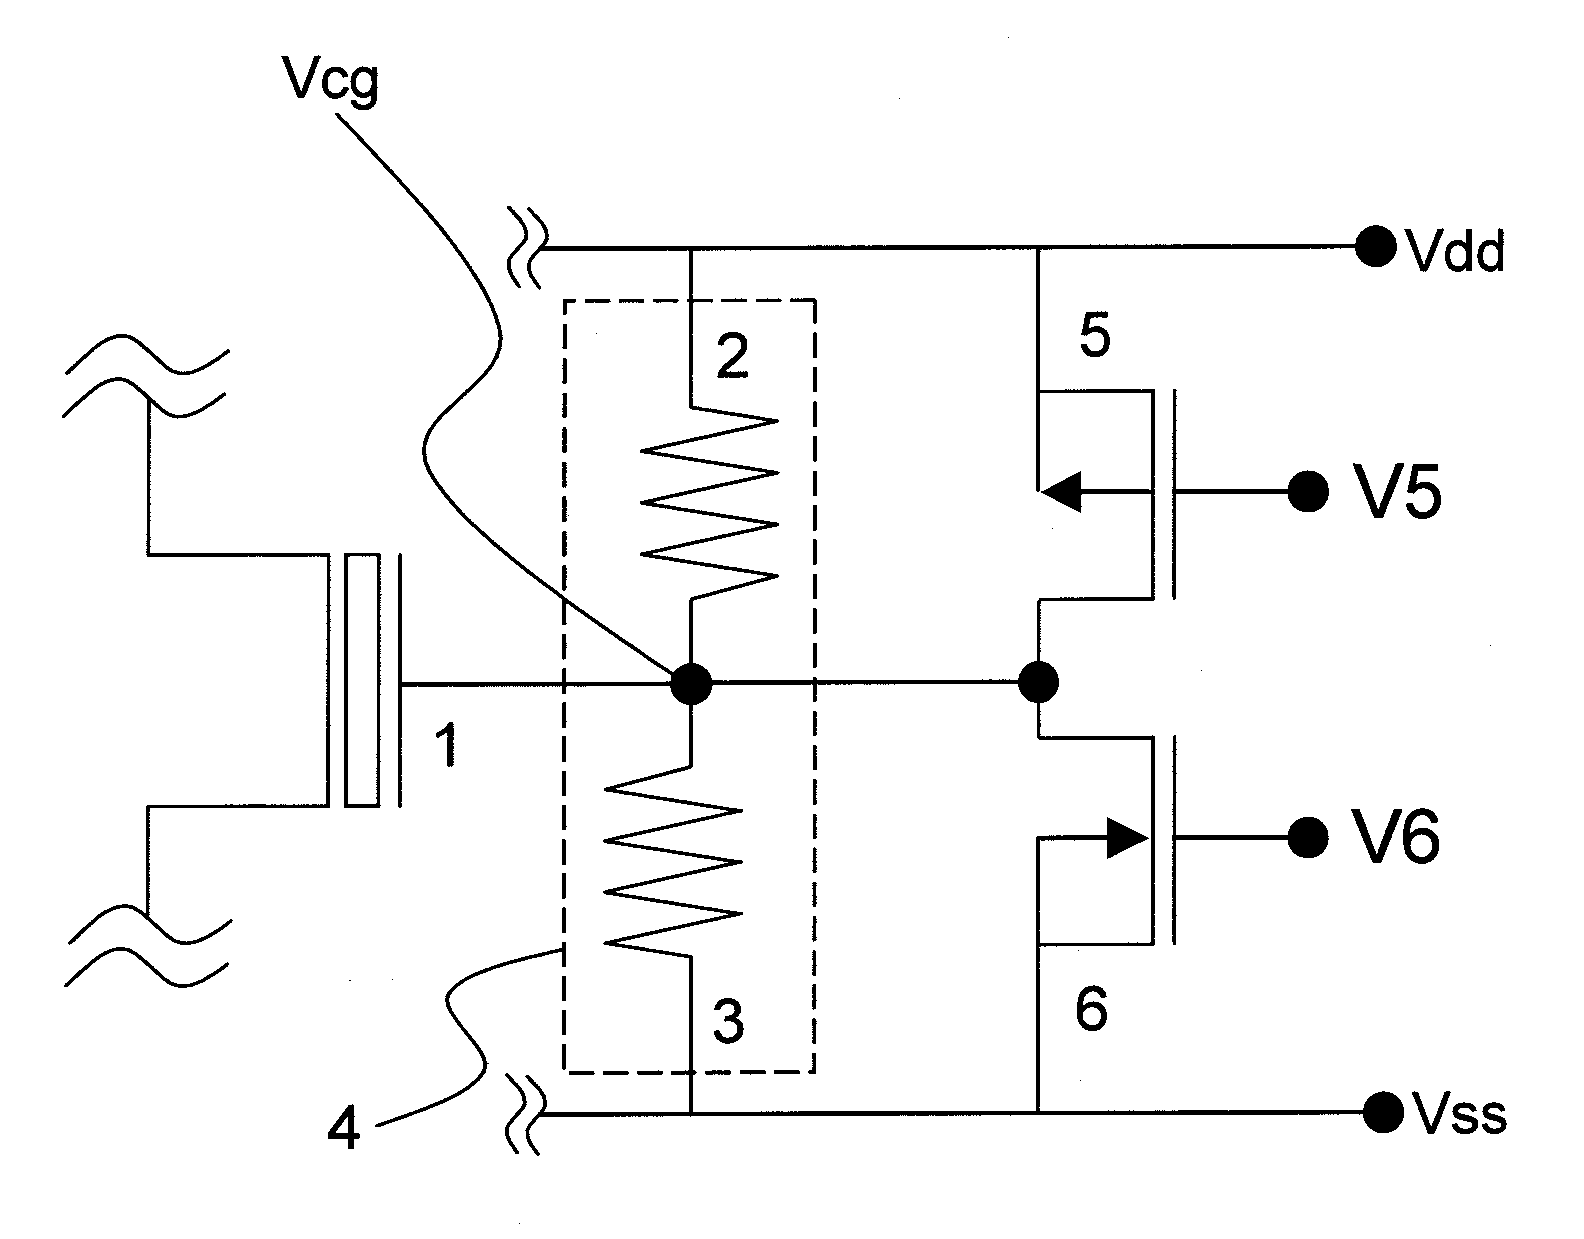 Non-volatile memory circuit